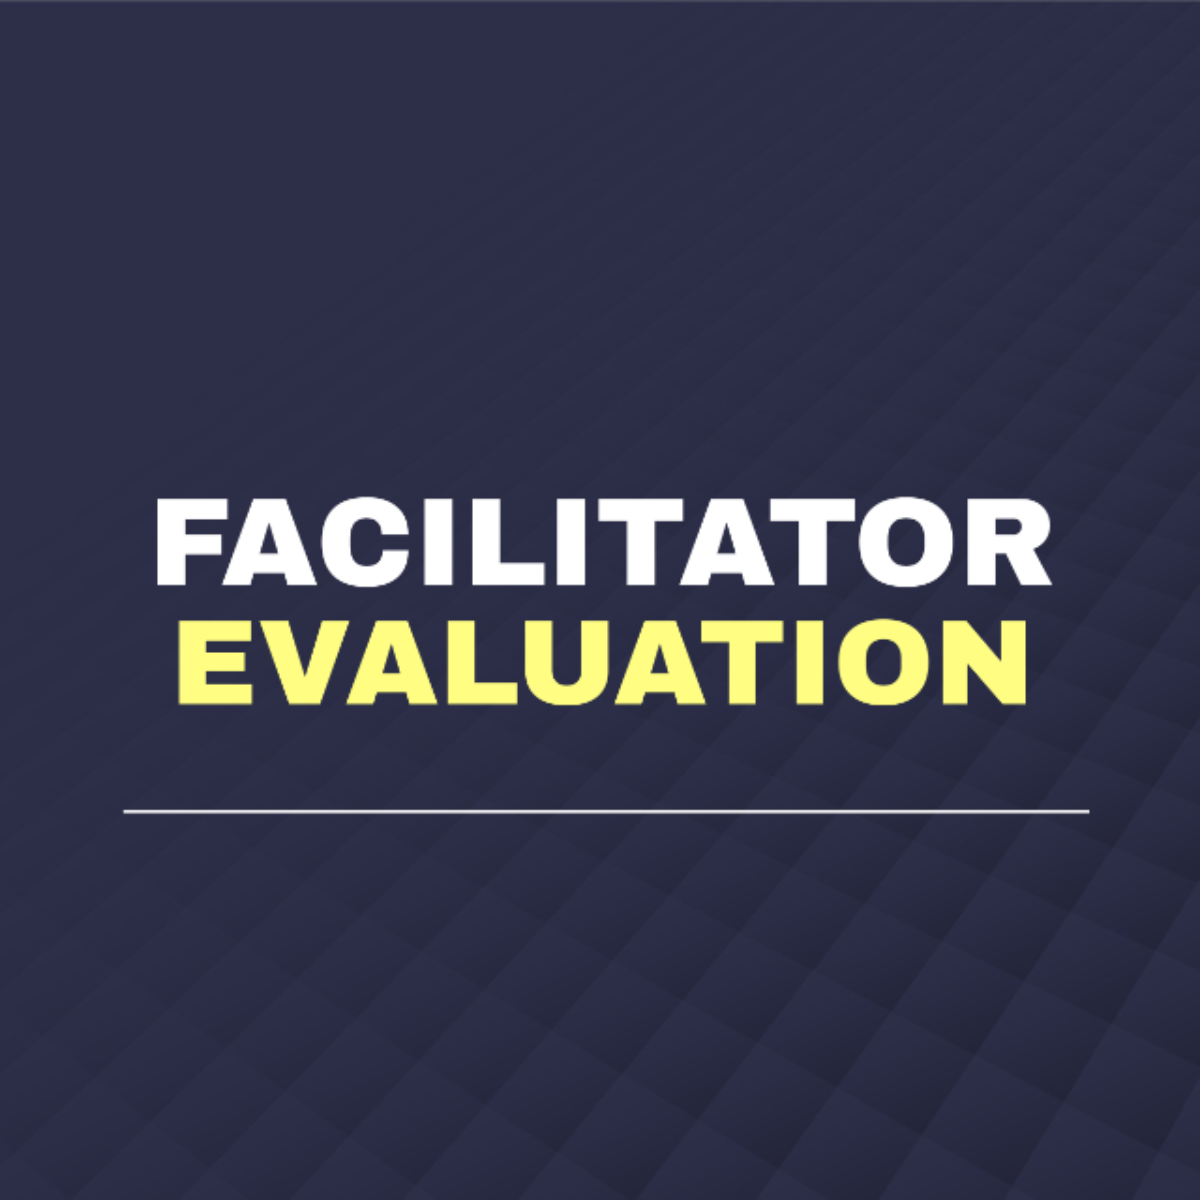 Facilitator Evaluation Template